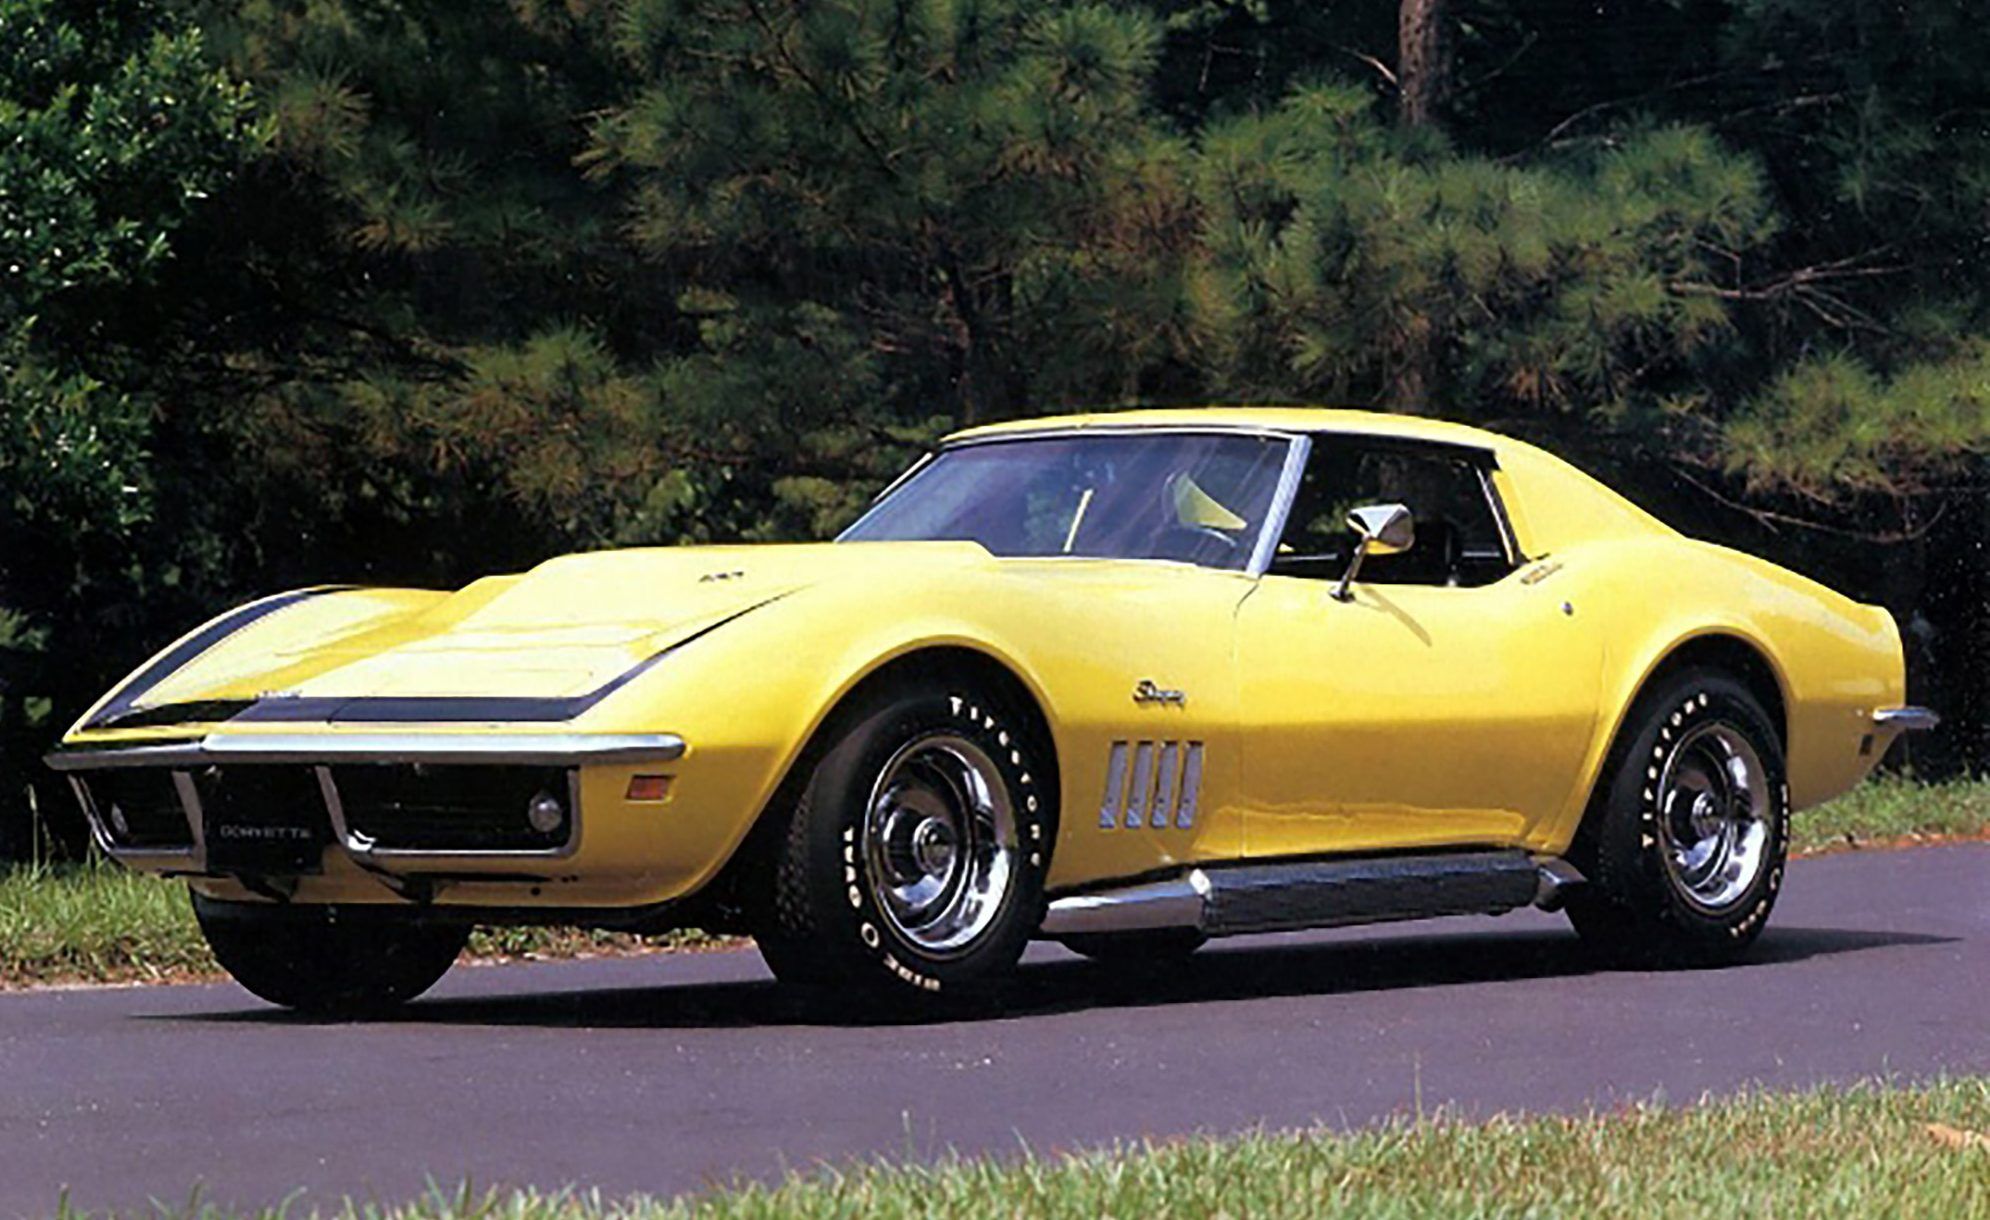 1969 Chevrolet Corvette ZL1 (Yellow)  - Front